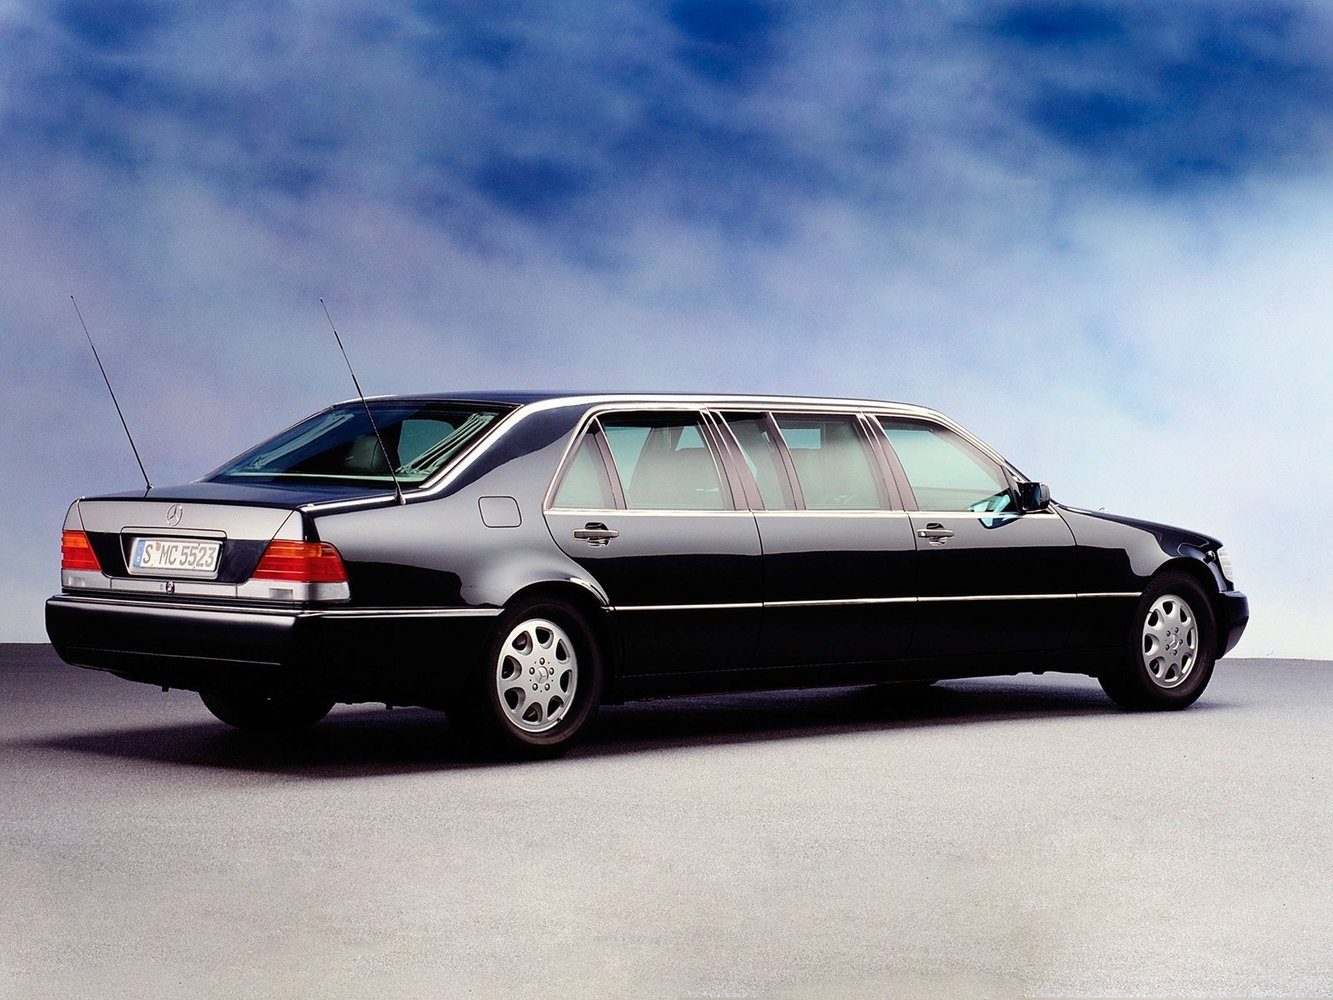 седан Pullman Mercedes-Benz S-klasse 1995 - 1998г выпуска модификация 6.0 AT (394 л.с.)